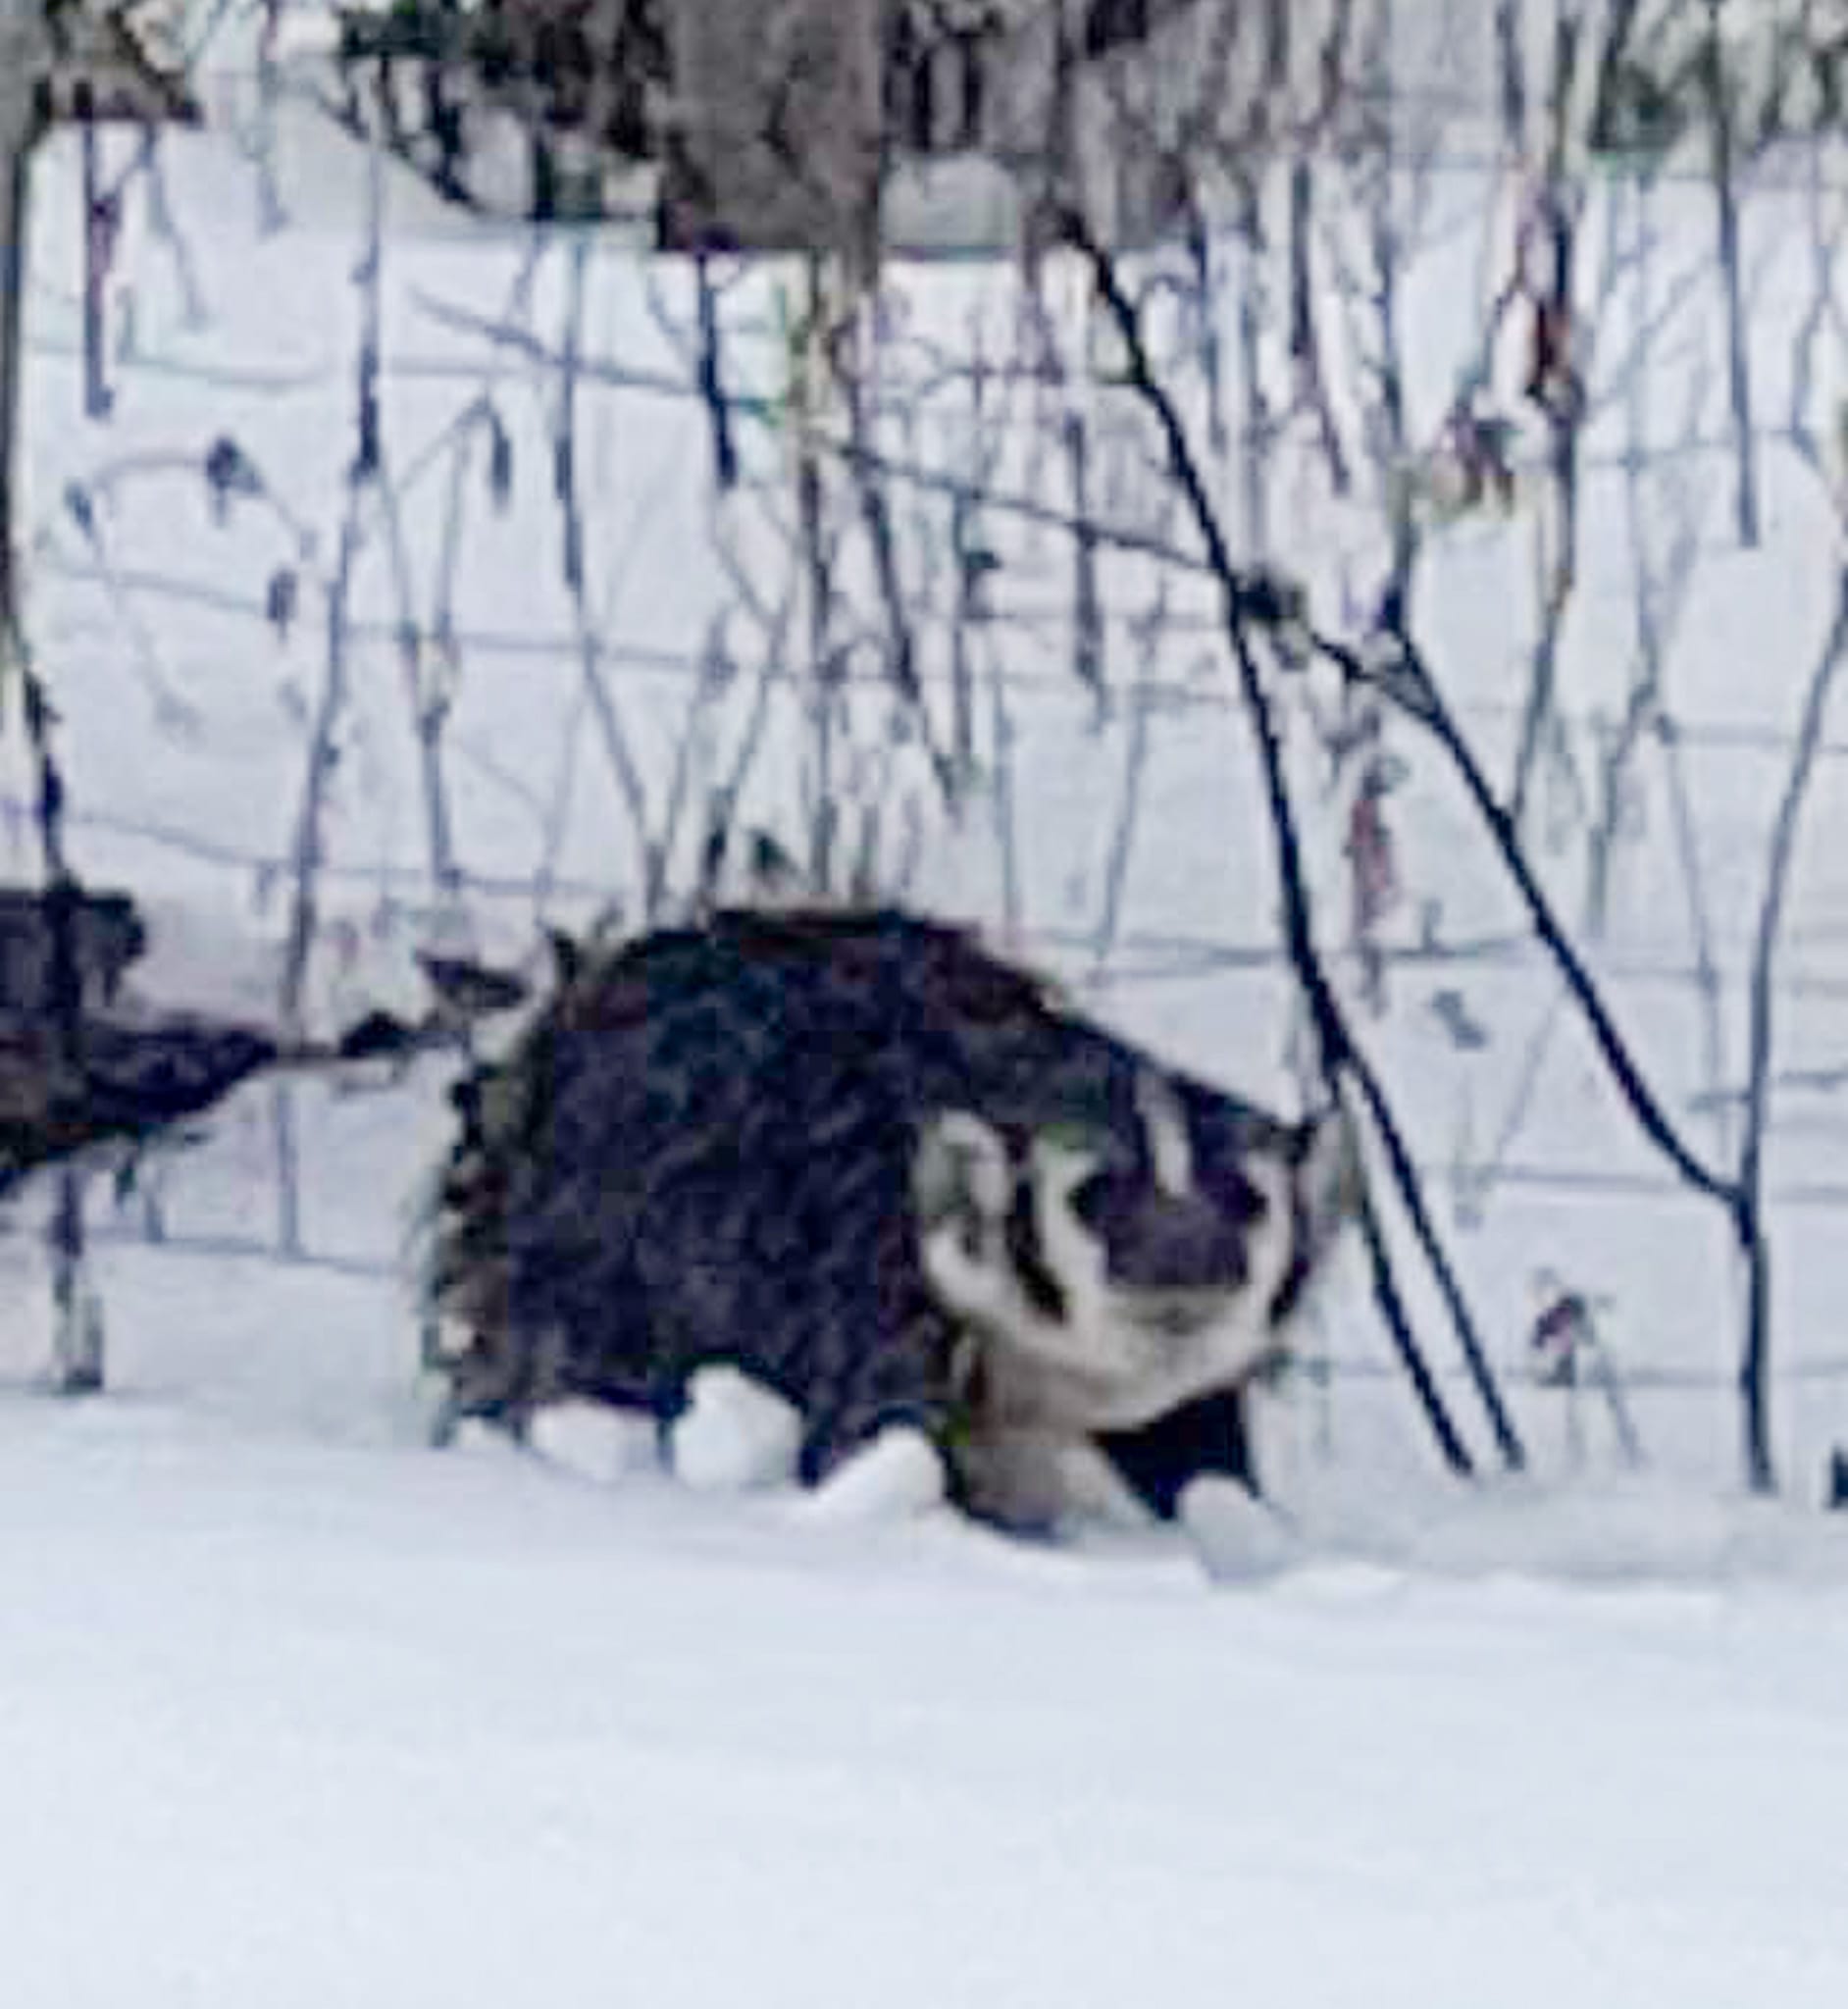 badger in snow